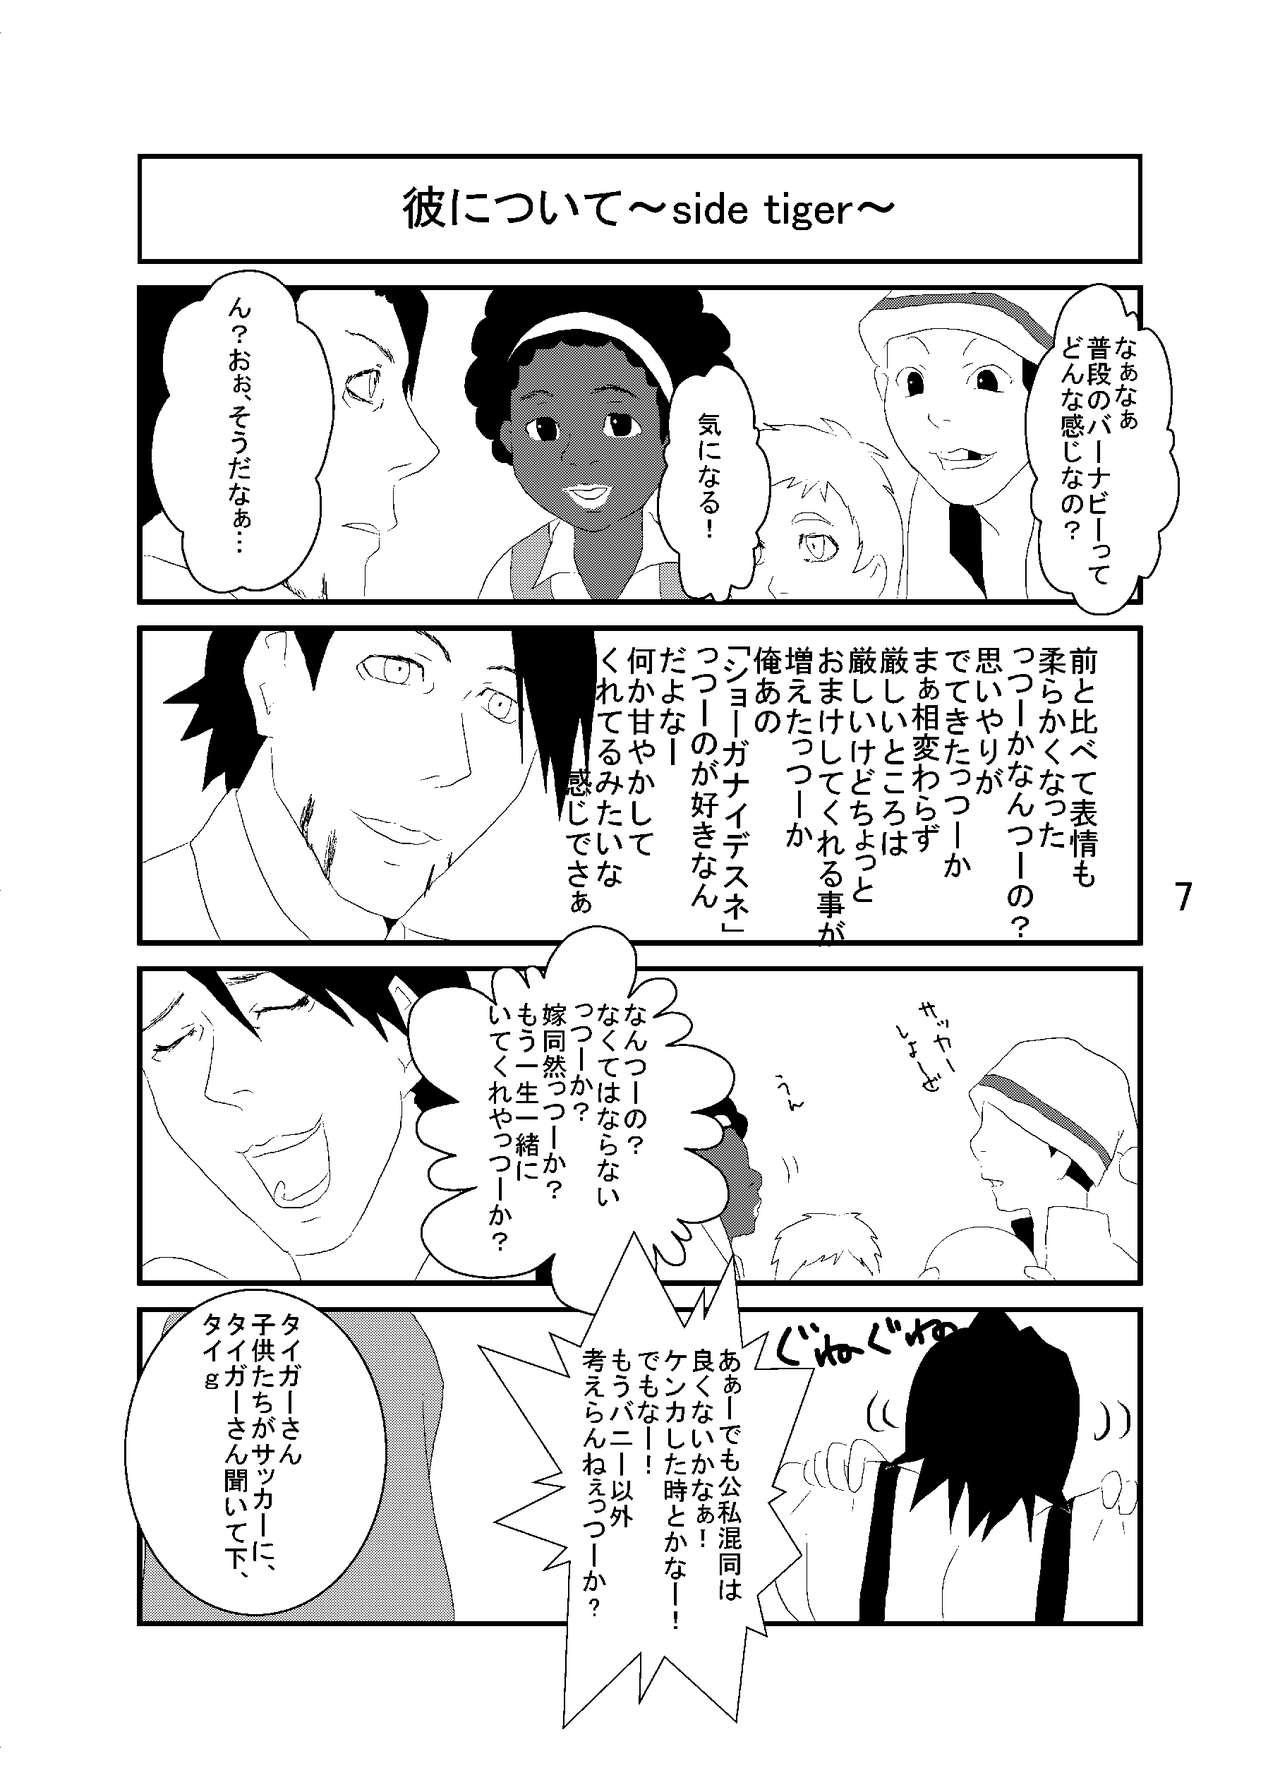 Nerd Web Sairoku Tora Umoto Sono 2 - Tiger and bunny Foot - Page 7